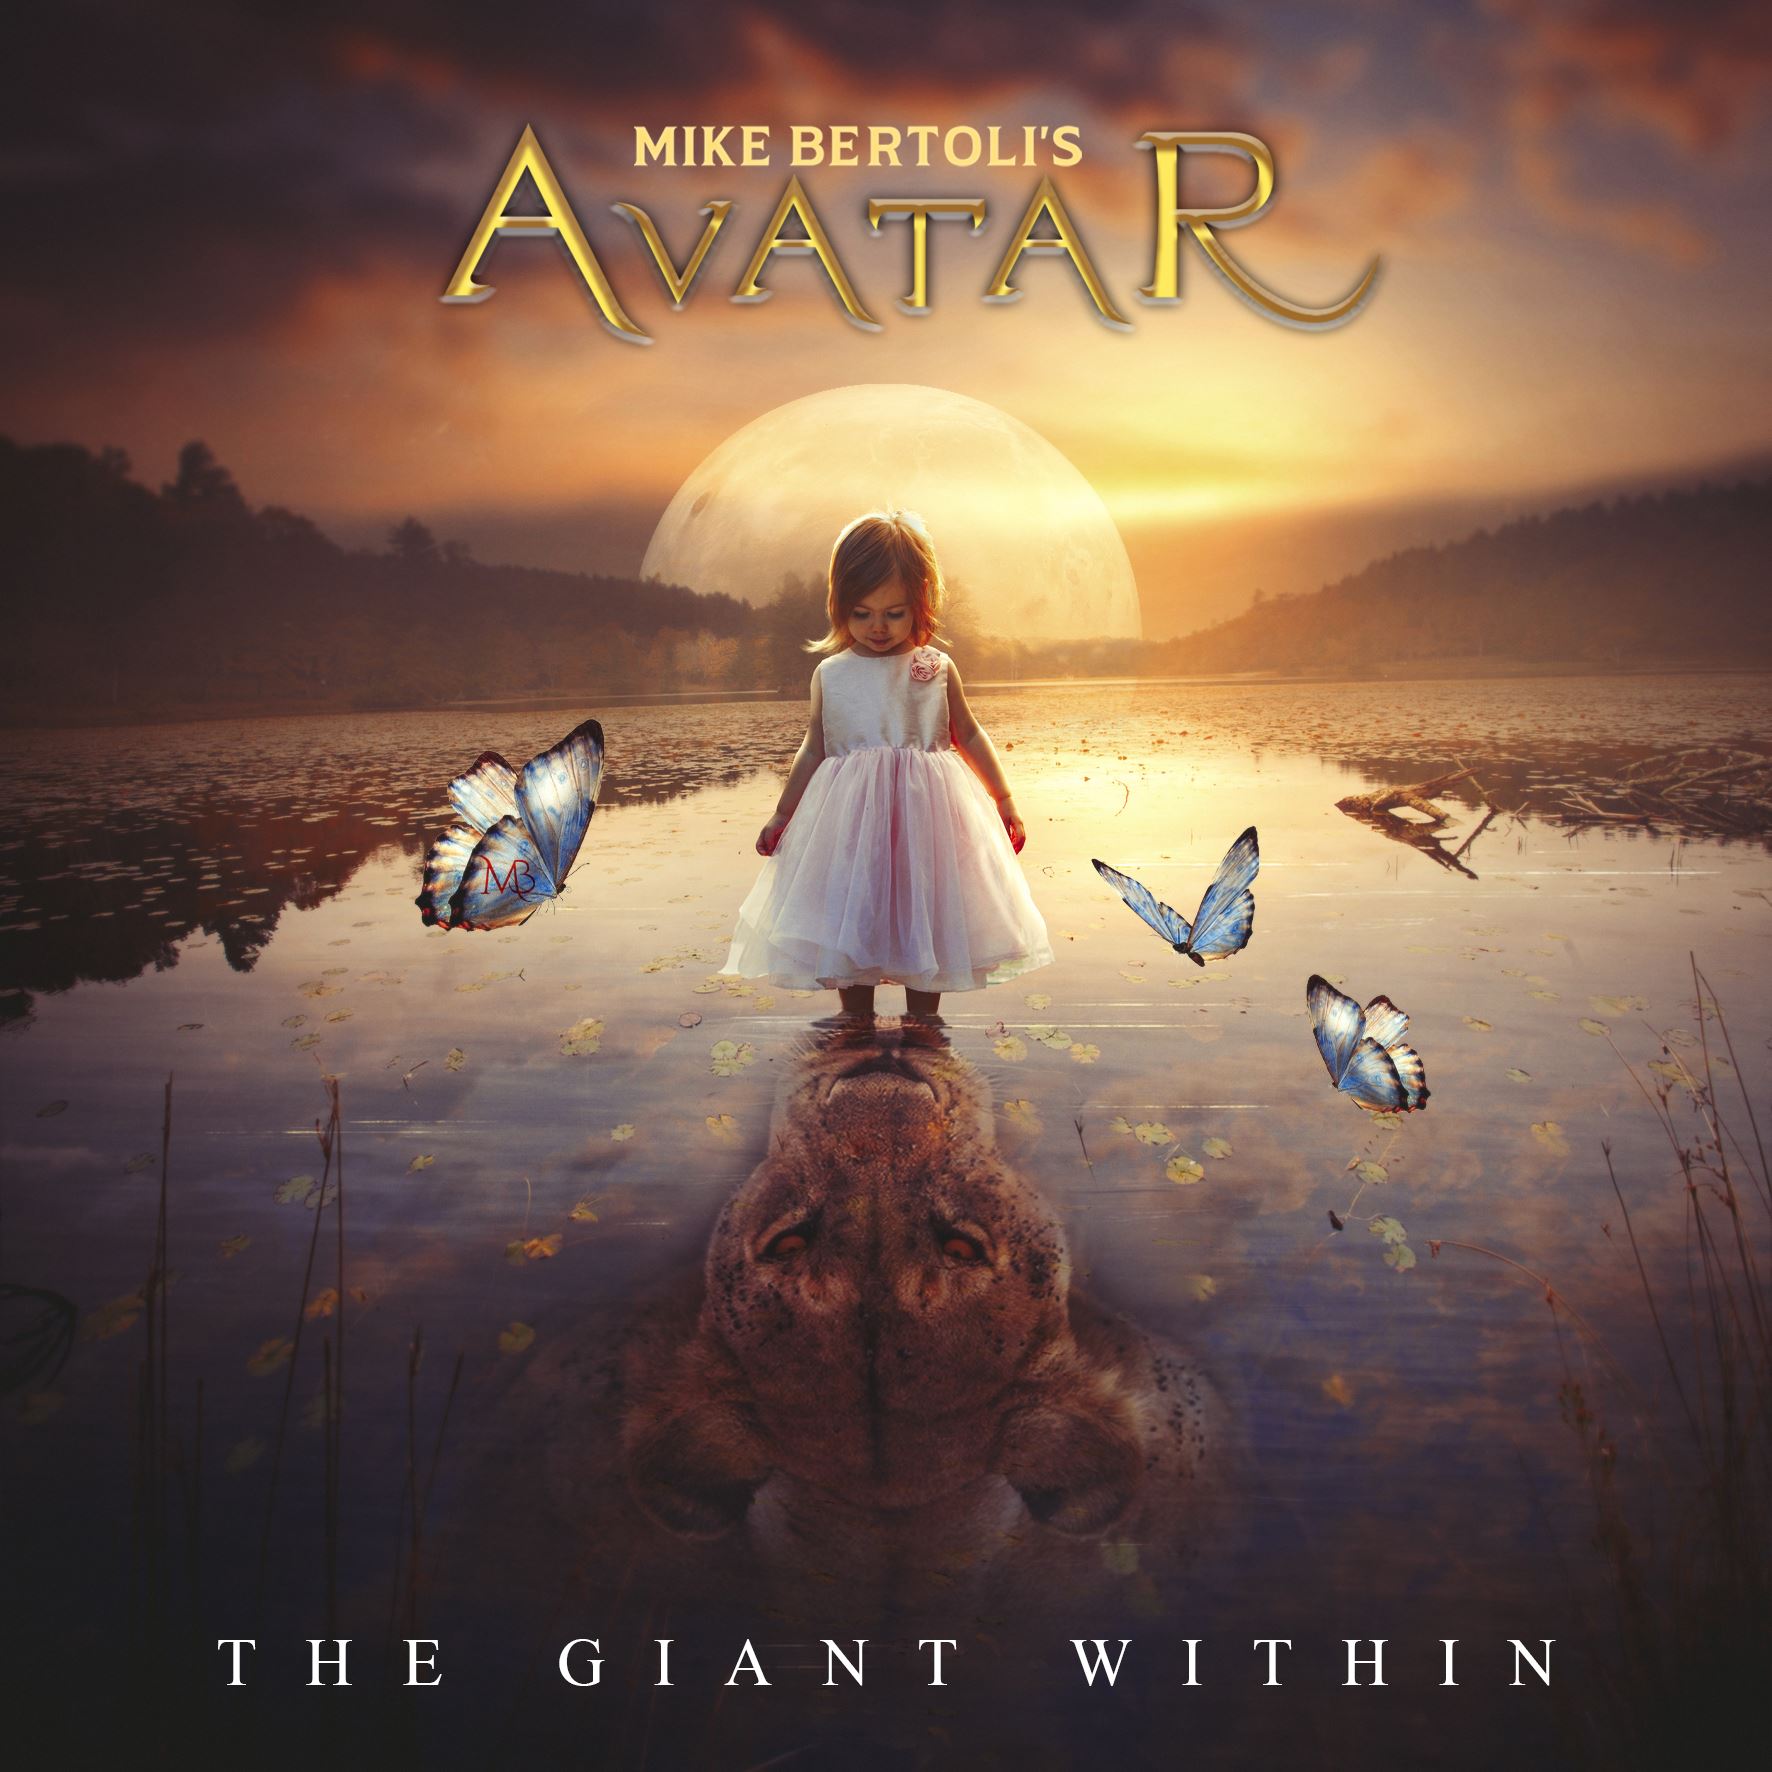 Mike Bertoli’s Avatar: The giant within